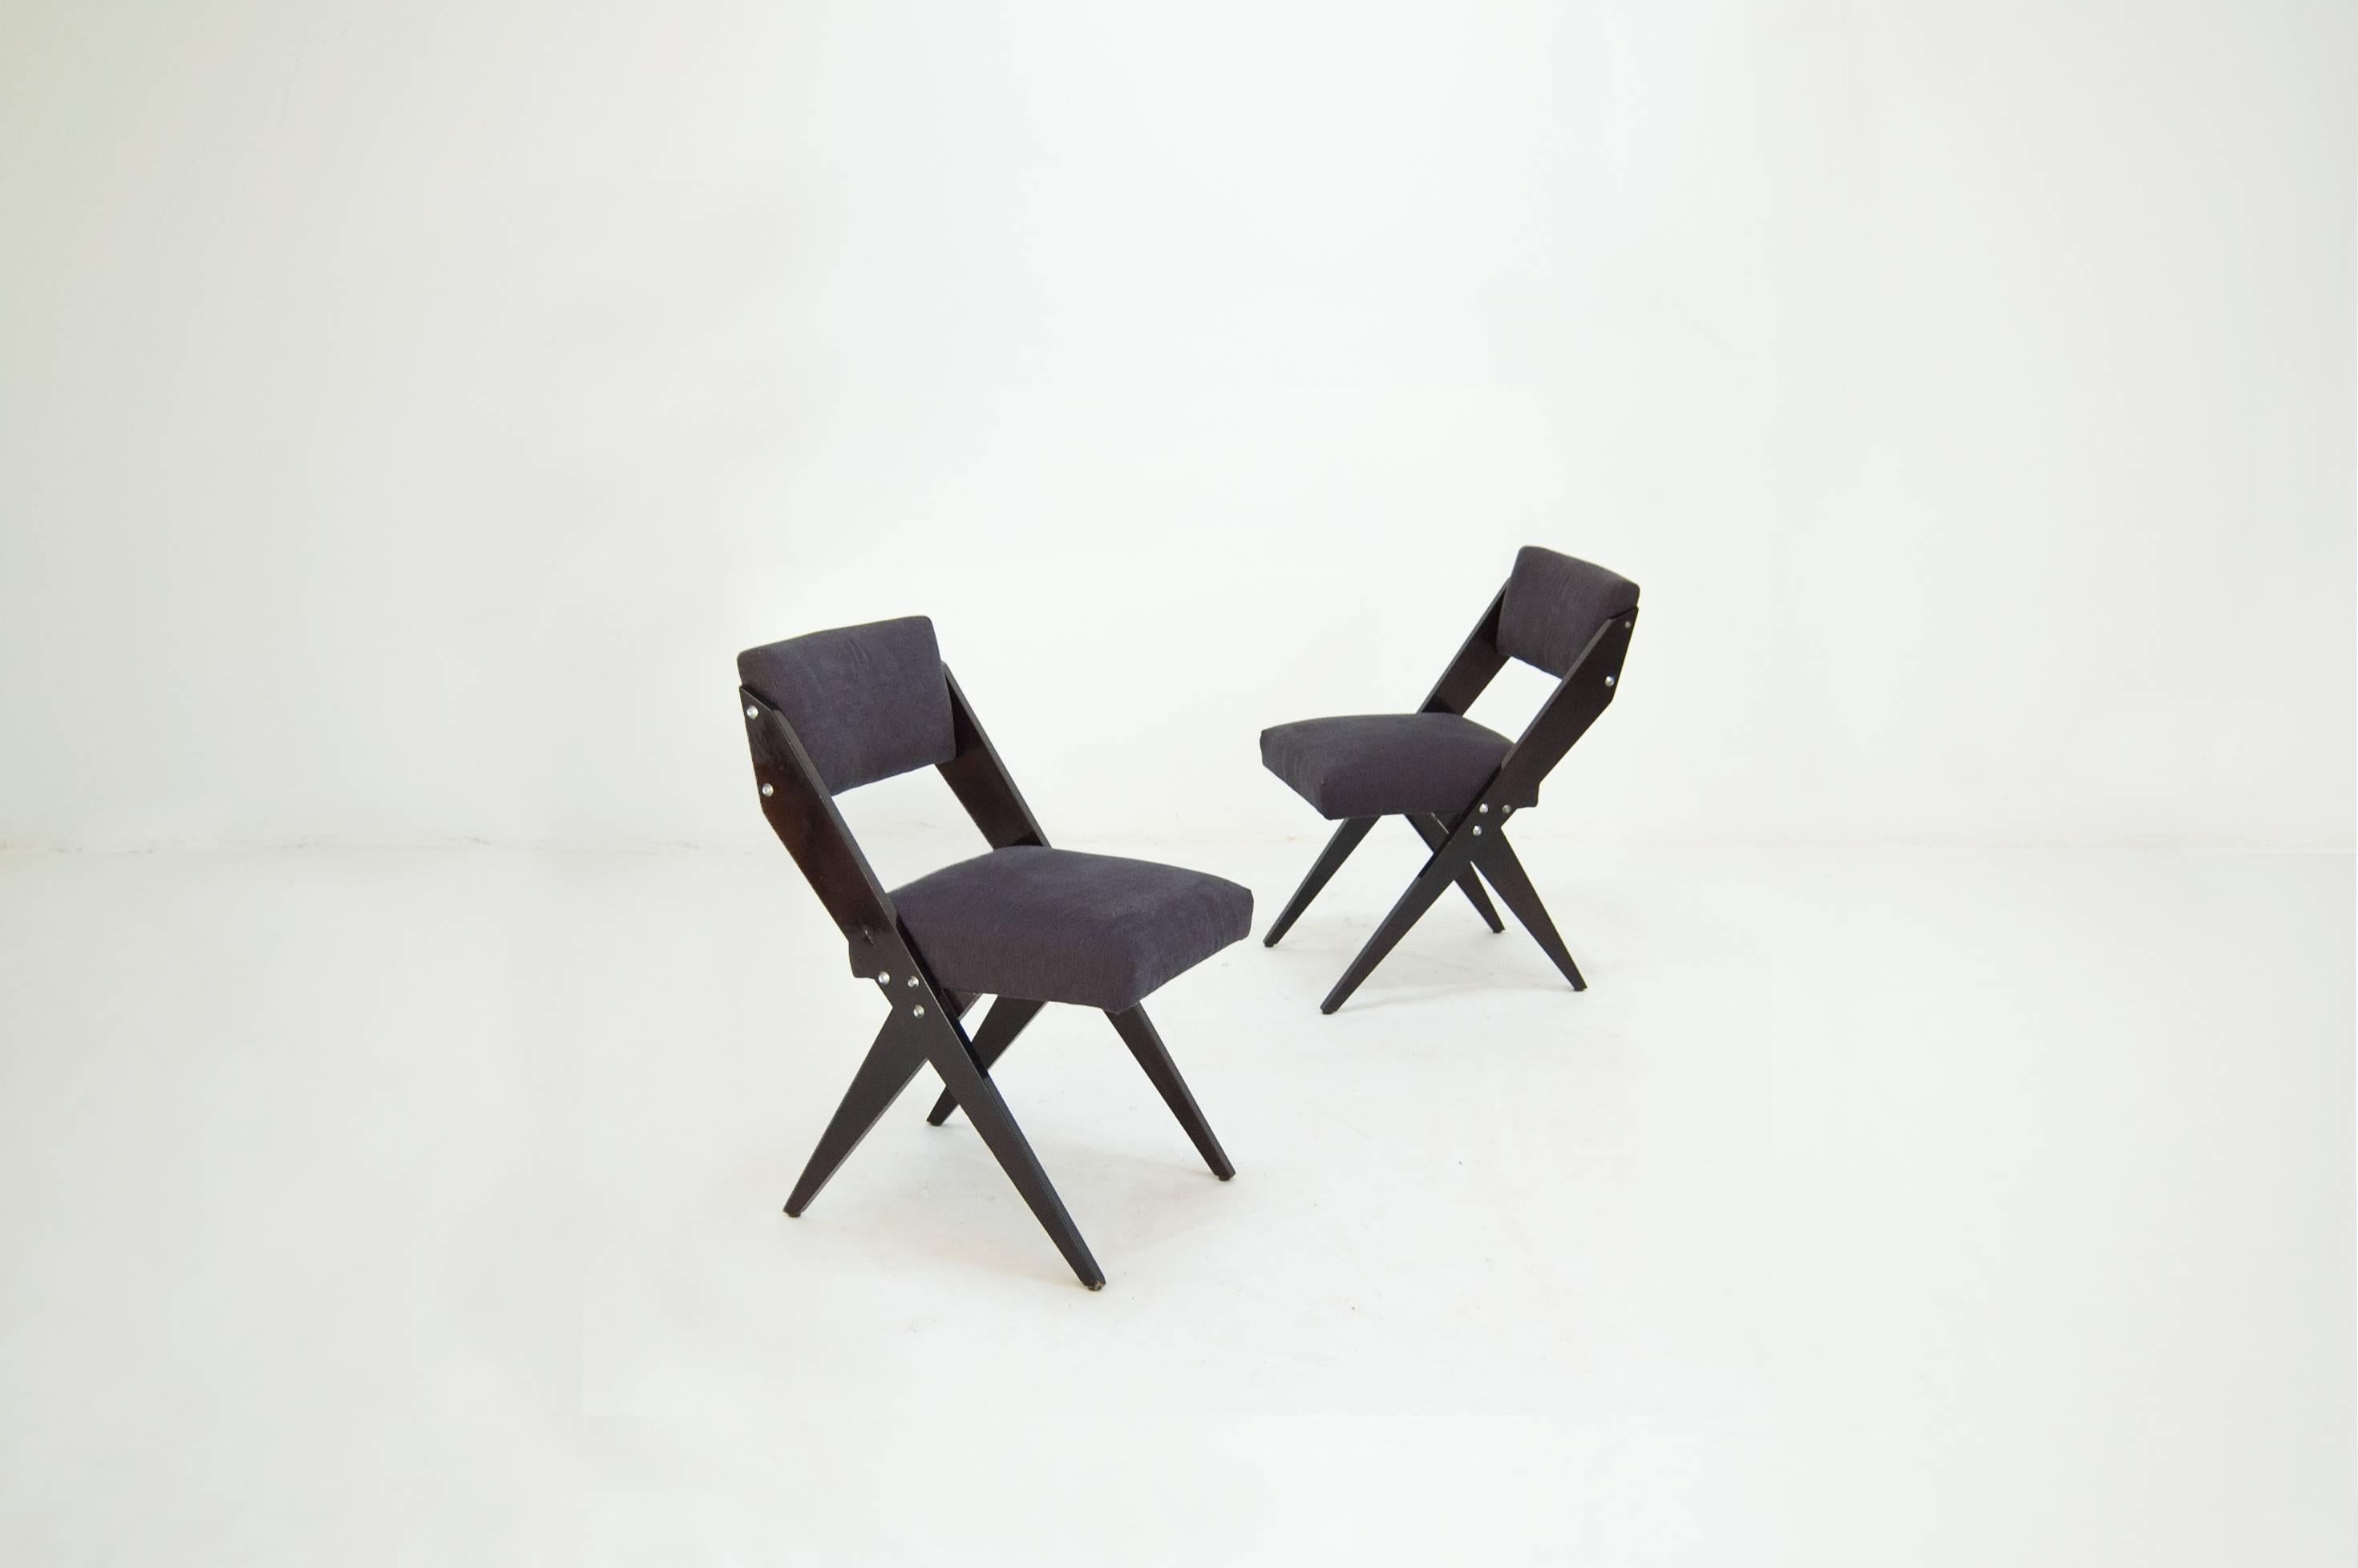 Jose Zanine de Caldas (1919-2001)

Set of four dining chairs model 